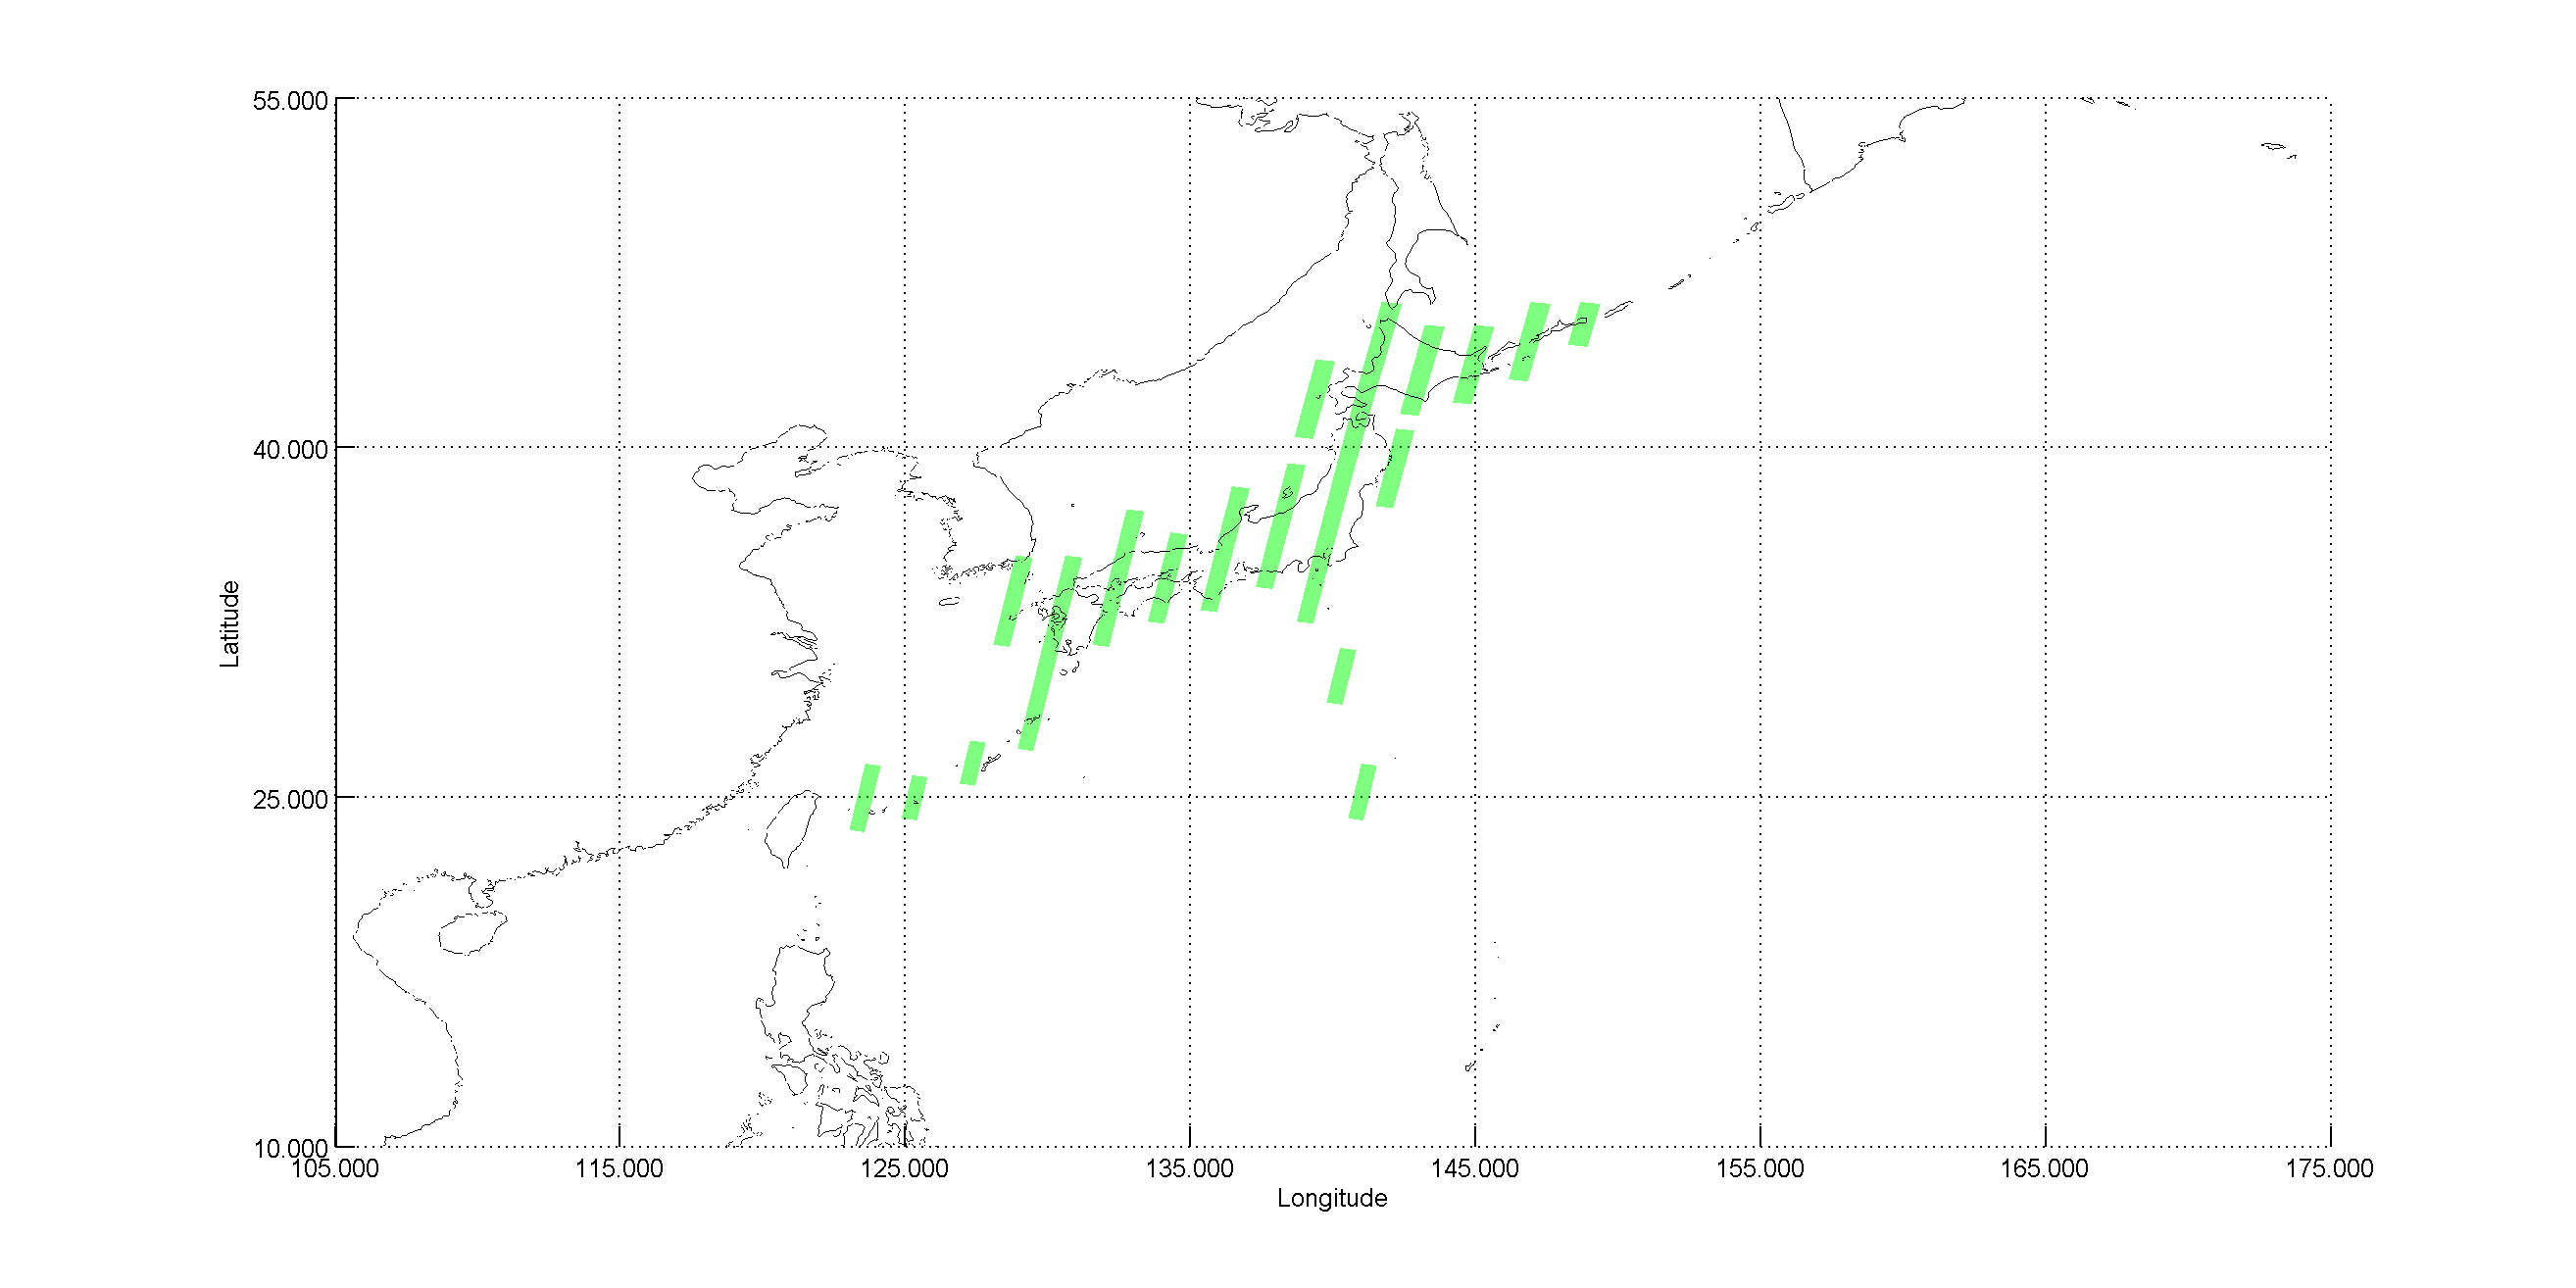 CYCLE_114 - Japan Descending passes